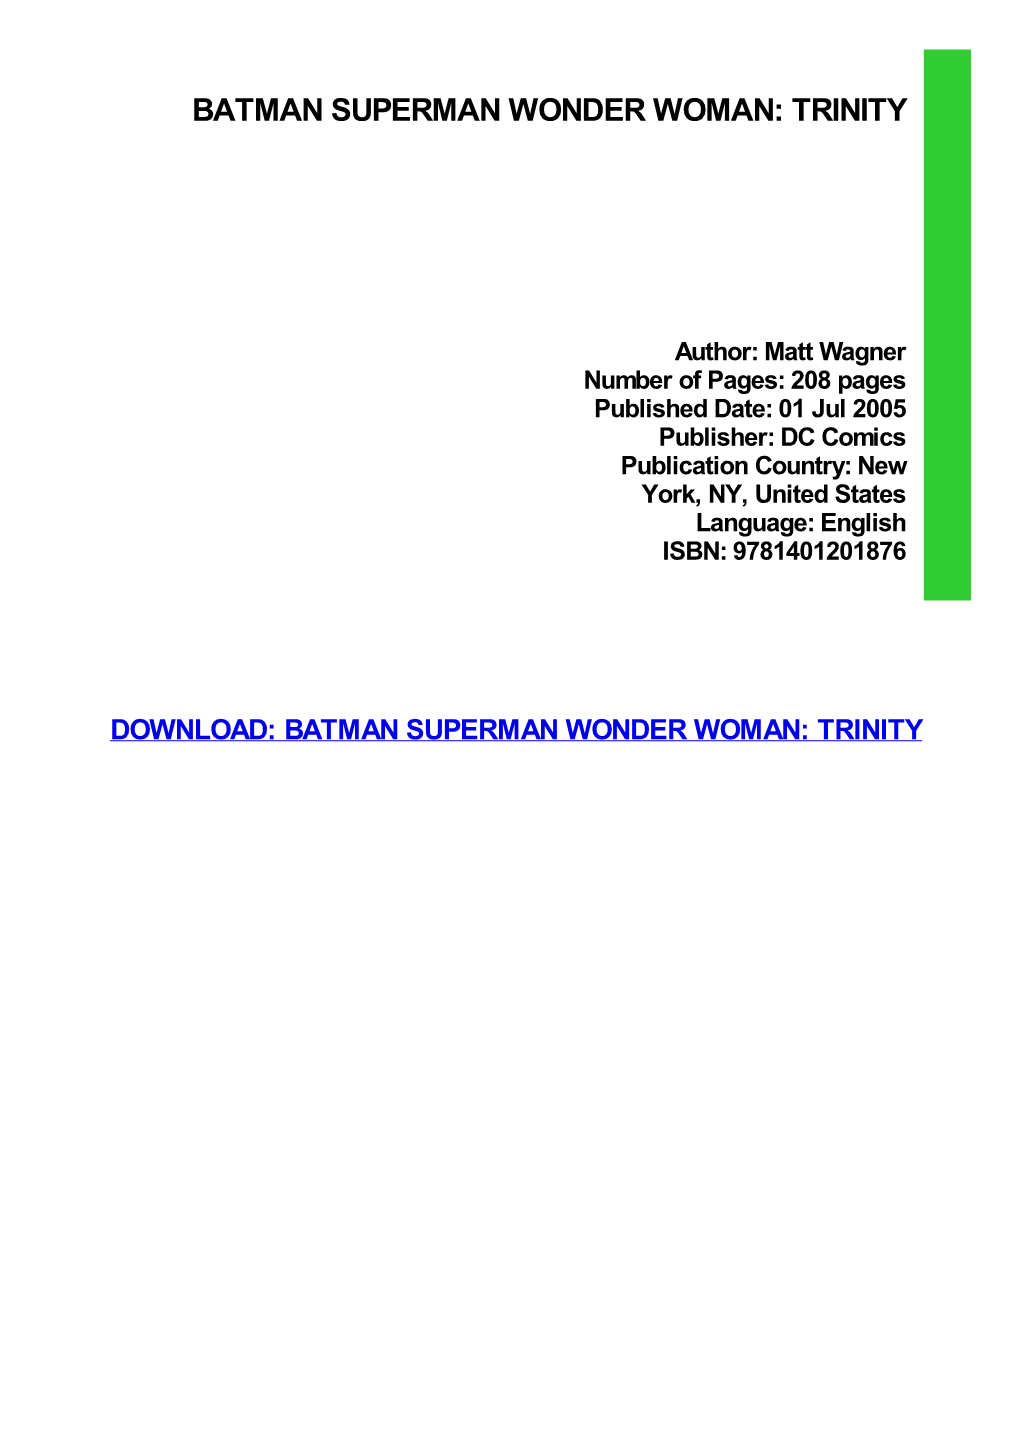 Read Book Batman Superman Wonder Woman: Trinity Pdf Free